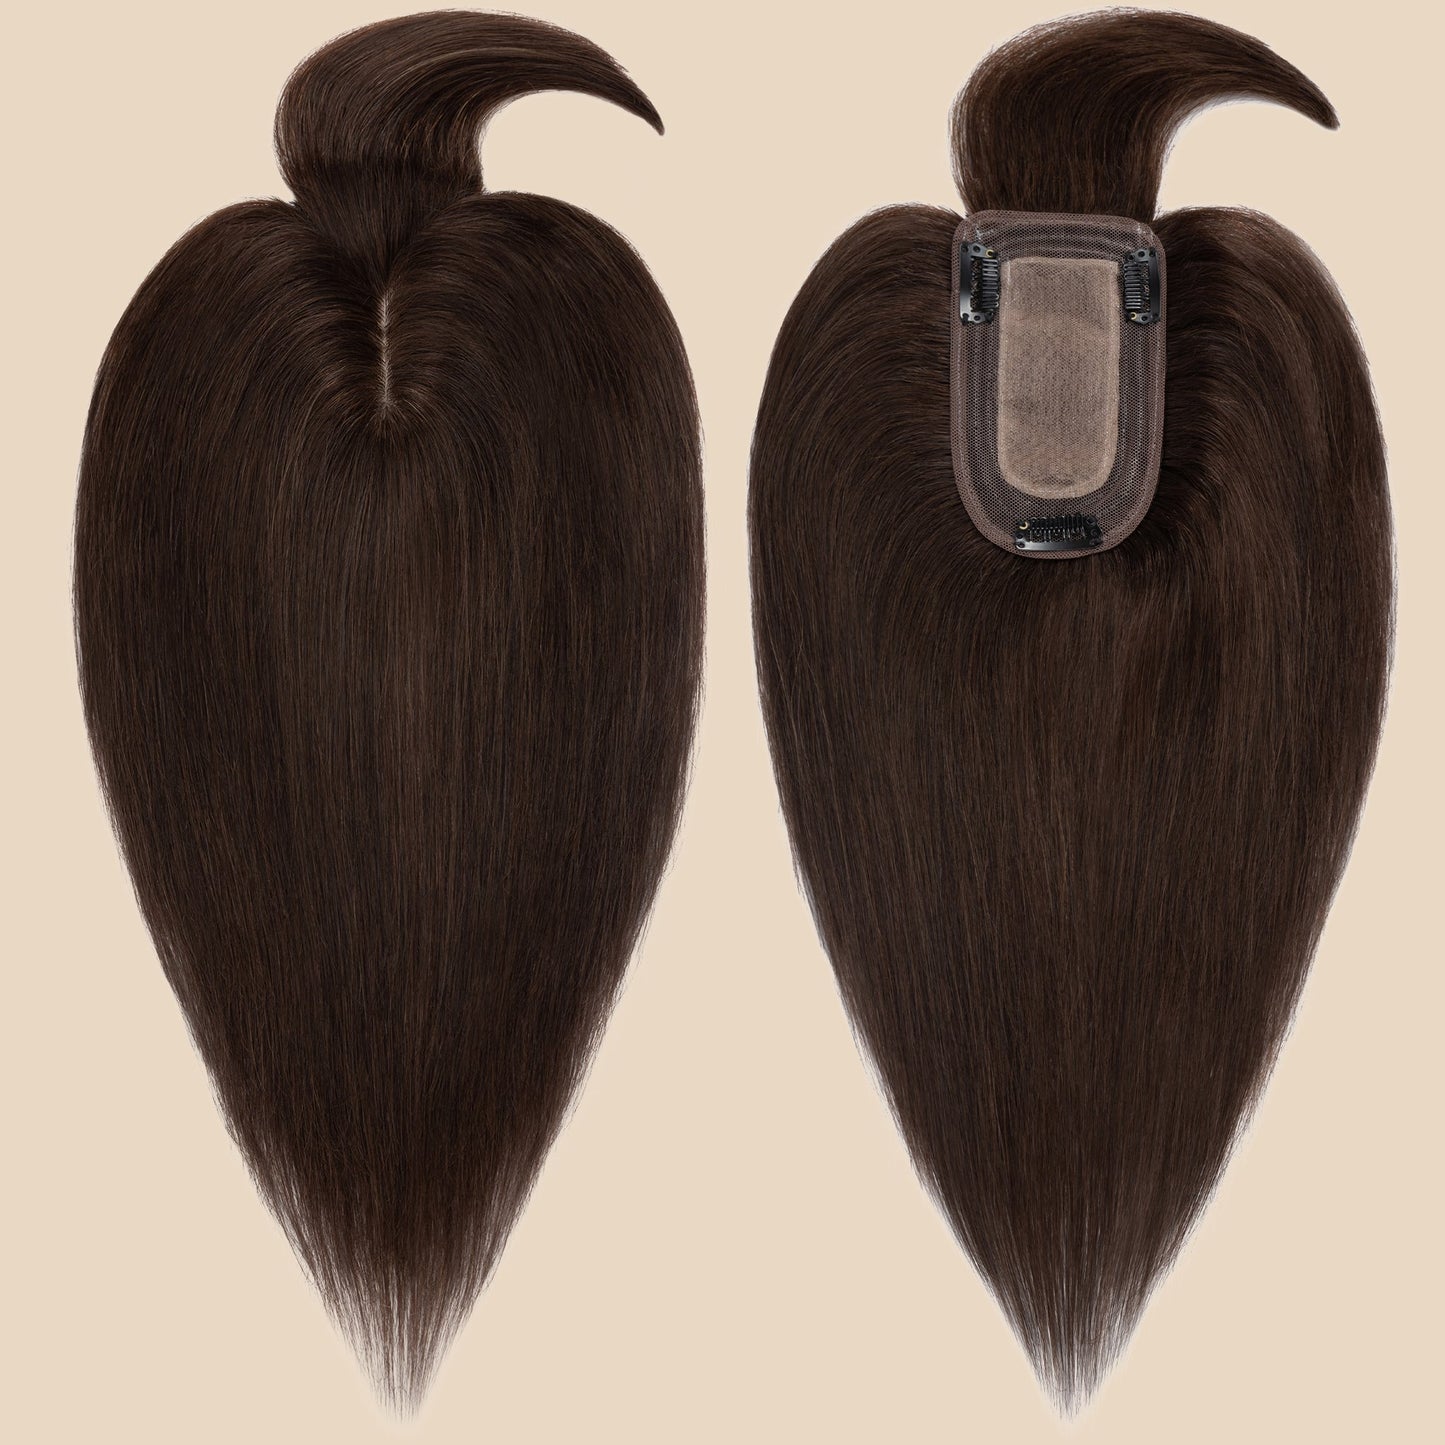 3x5" Bionic Scalp Top Dark Brown Human Hair Topper with Bangs segohair.com